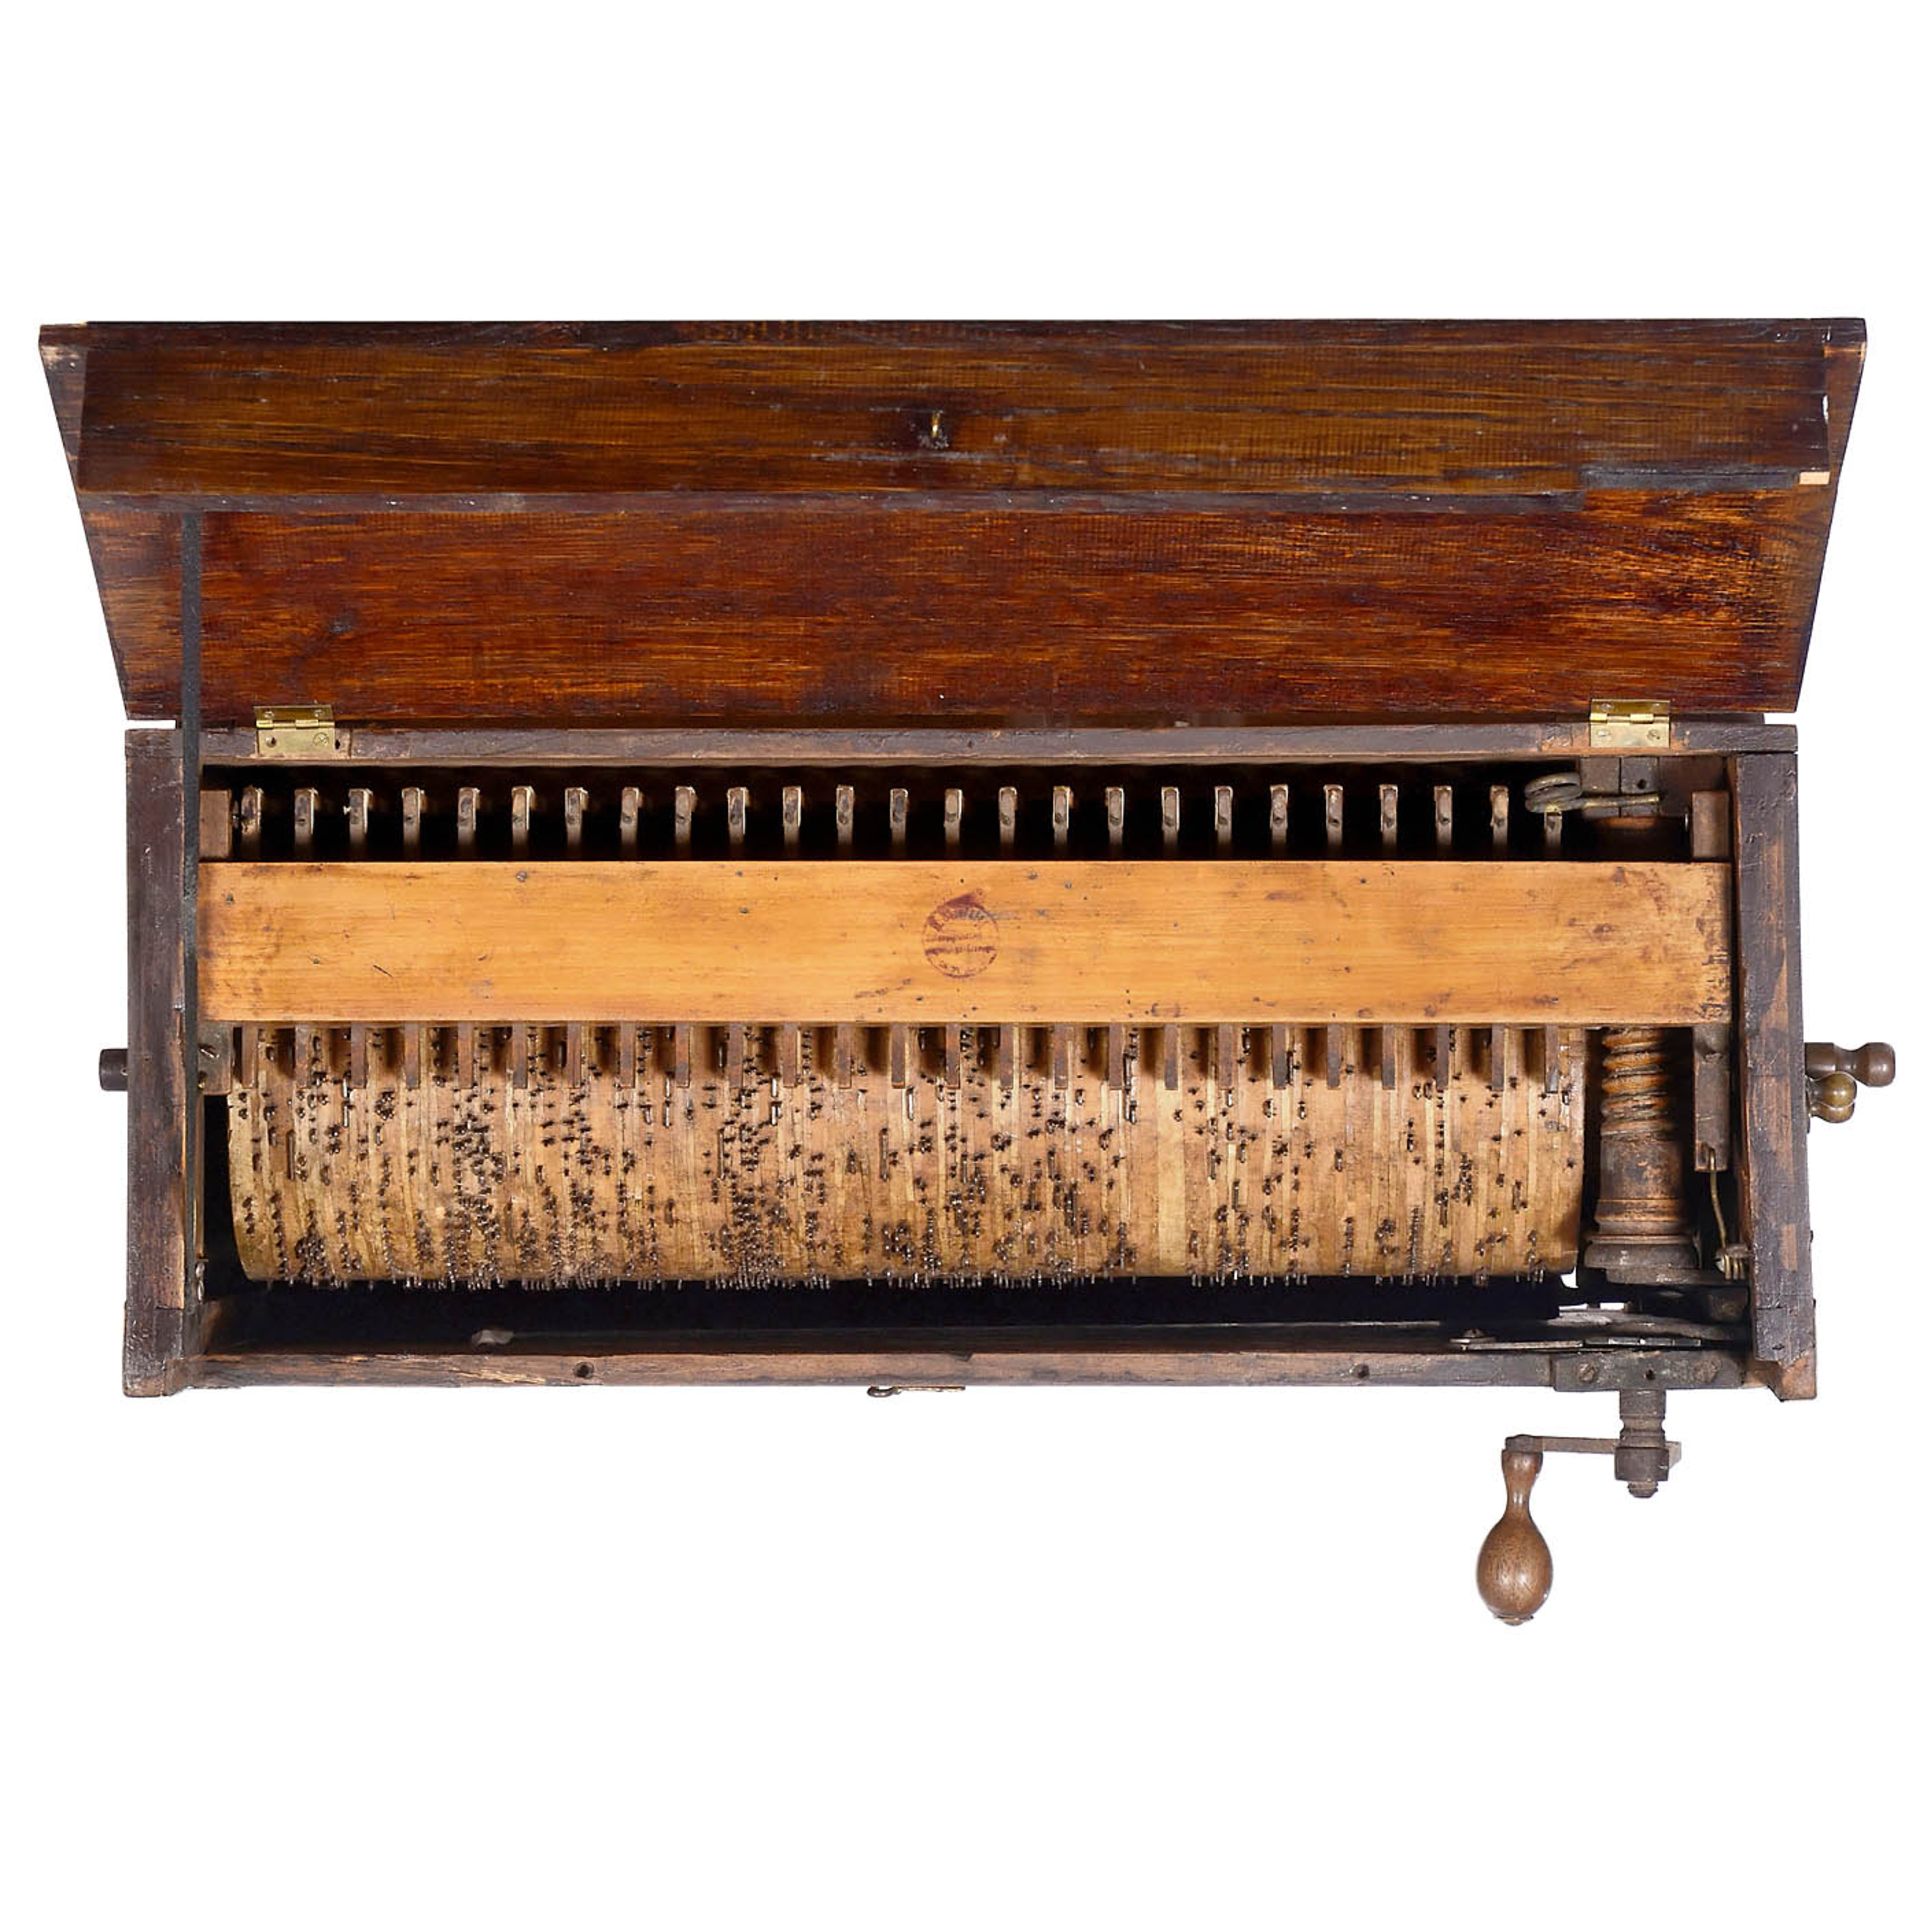 Early Bohemian Street Barrel Organ by Kamenik, c. 1880 - Image 2 of 3